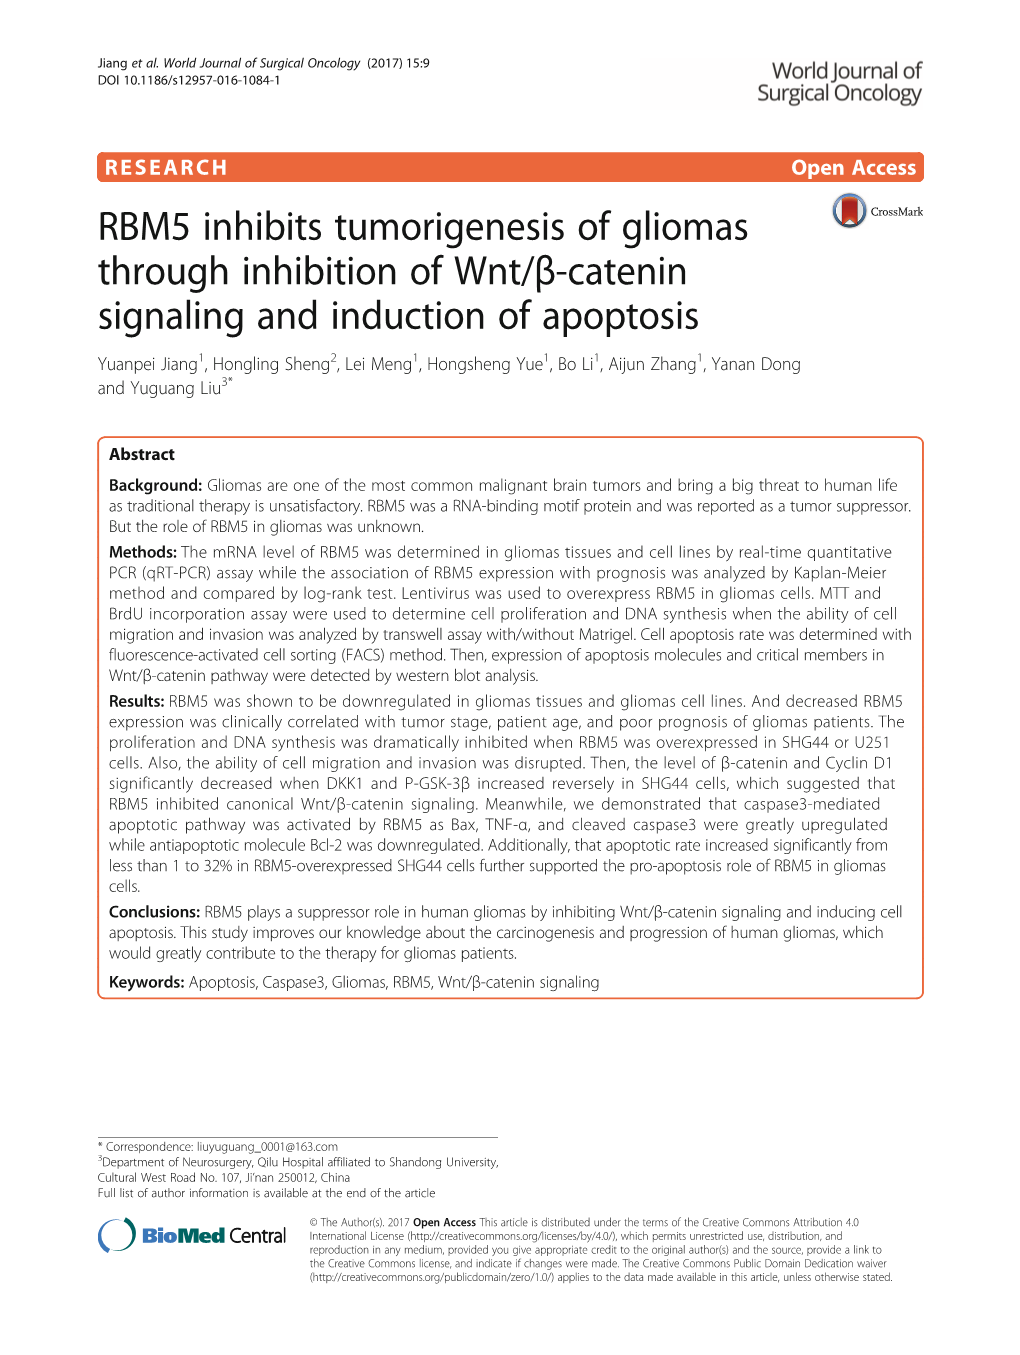 RBM5 Inhibits Tumorigenesis of Gliomas Through Inhibition of Wnt/Β-Catenin Signaling and Induction of Apoptosis